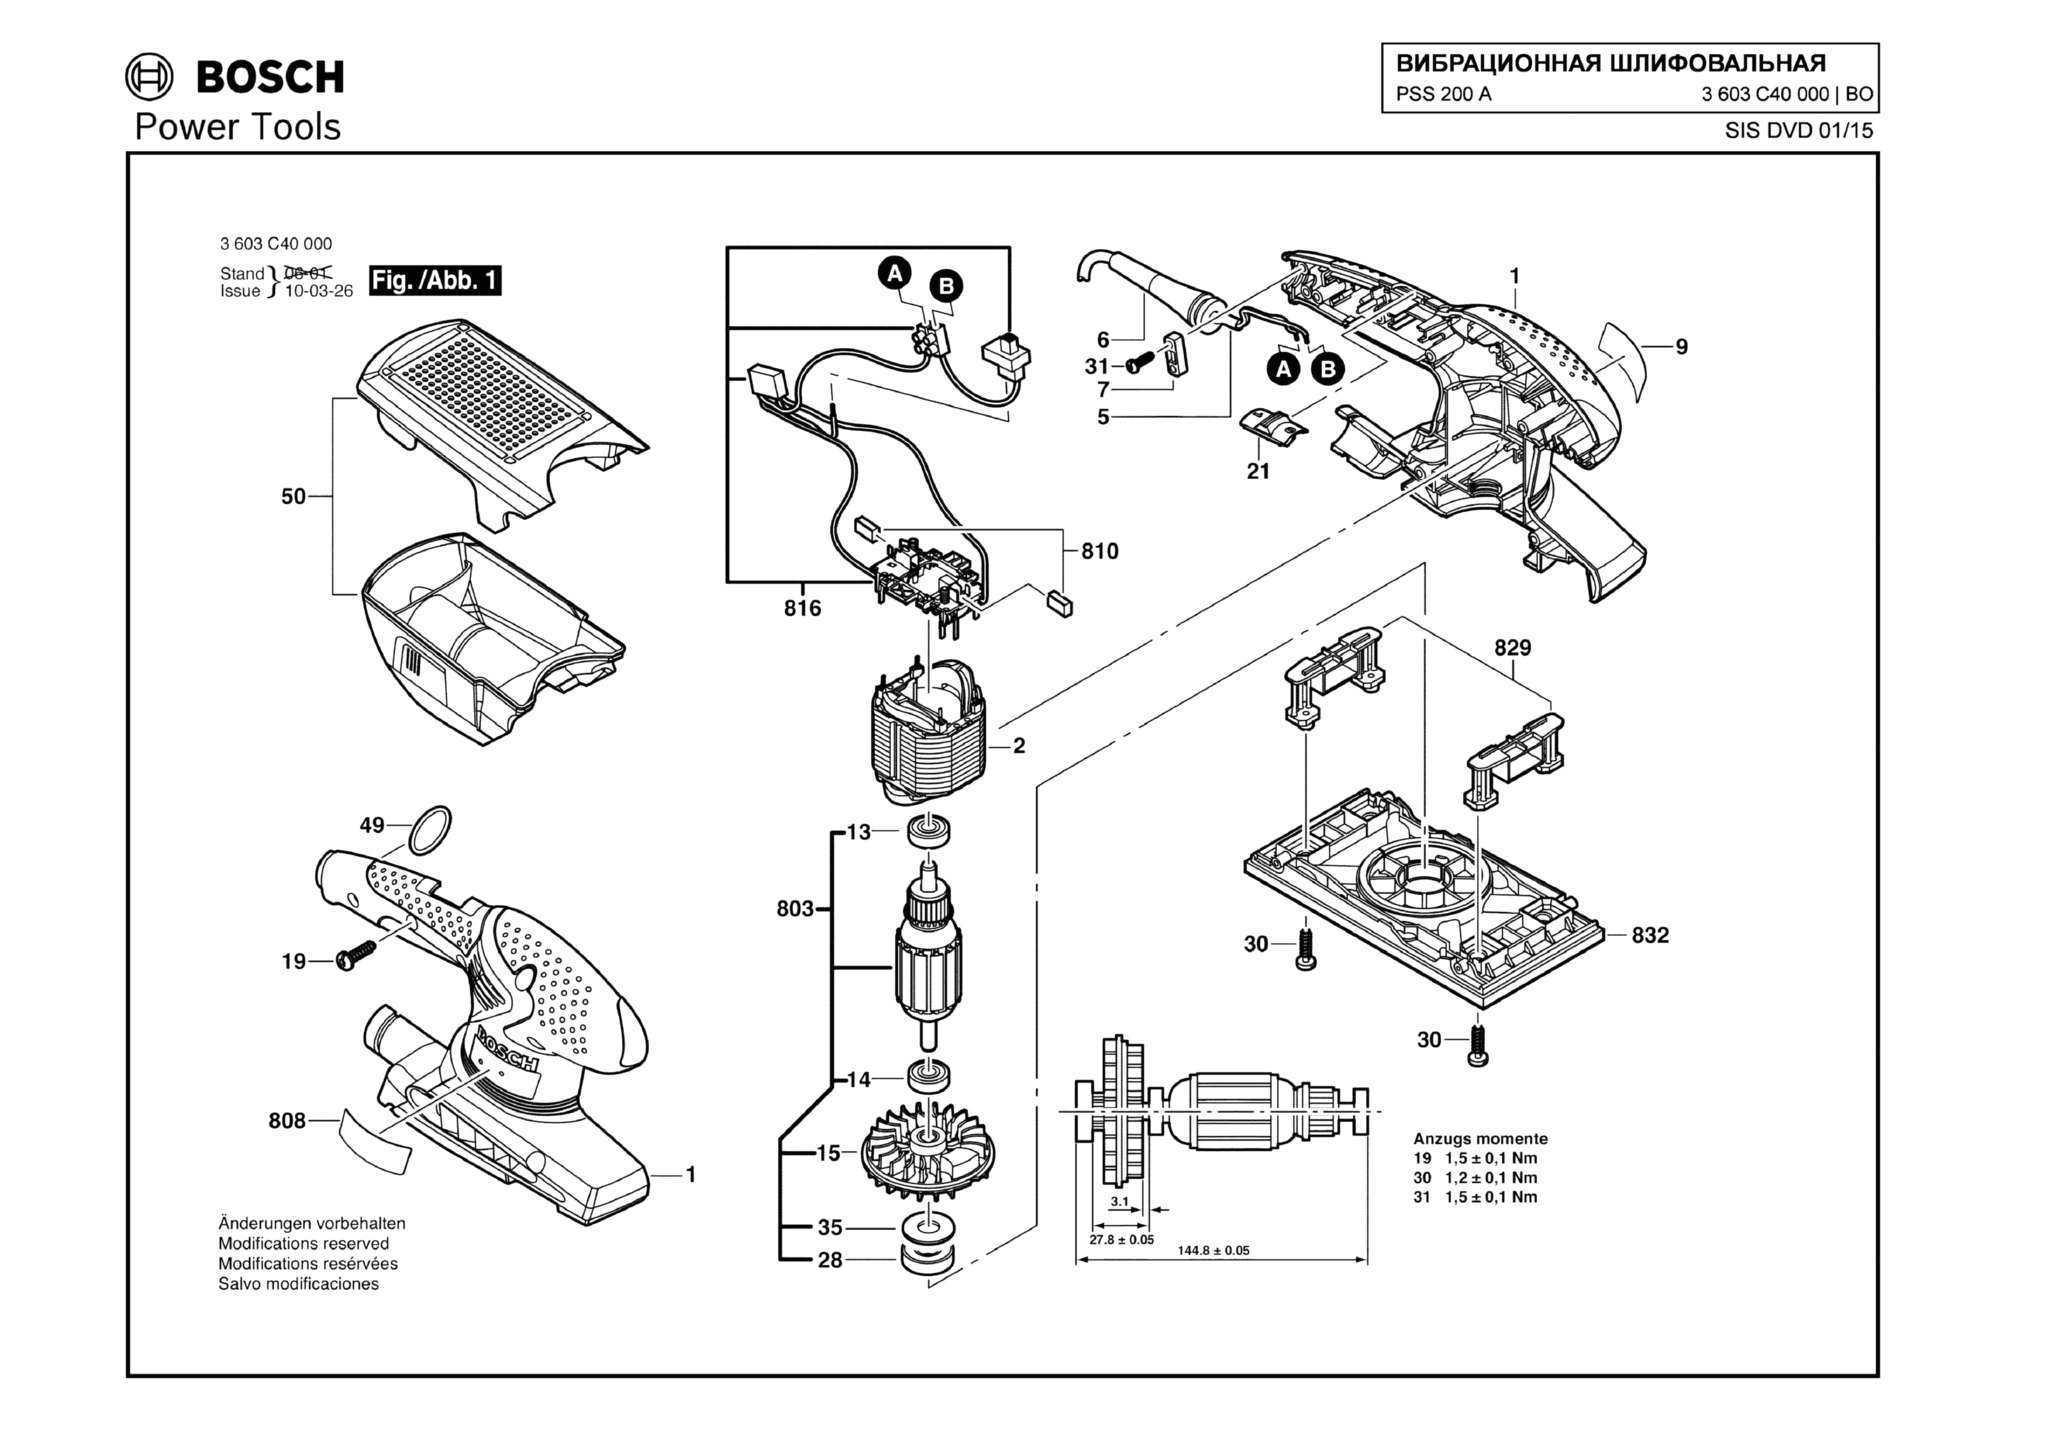 Запчасти, схема и деталировка Bosch PSS 200 A (ТИП 3603C40000)